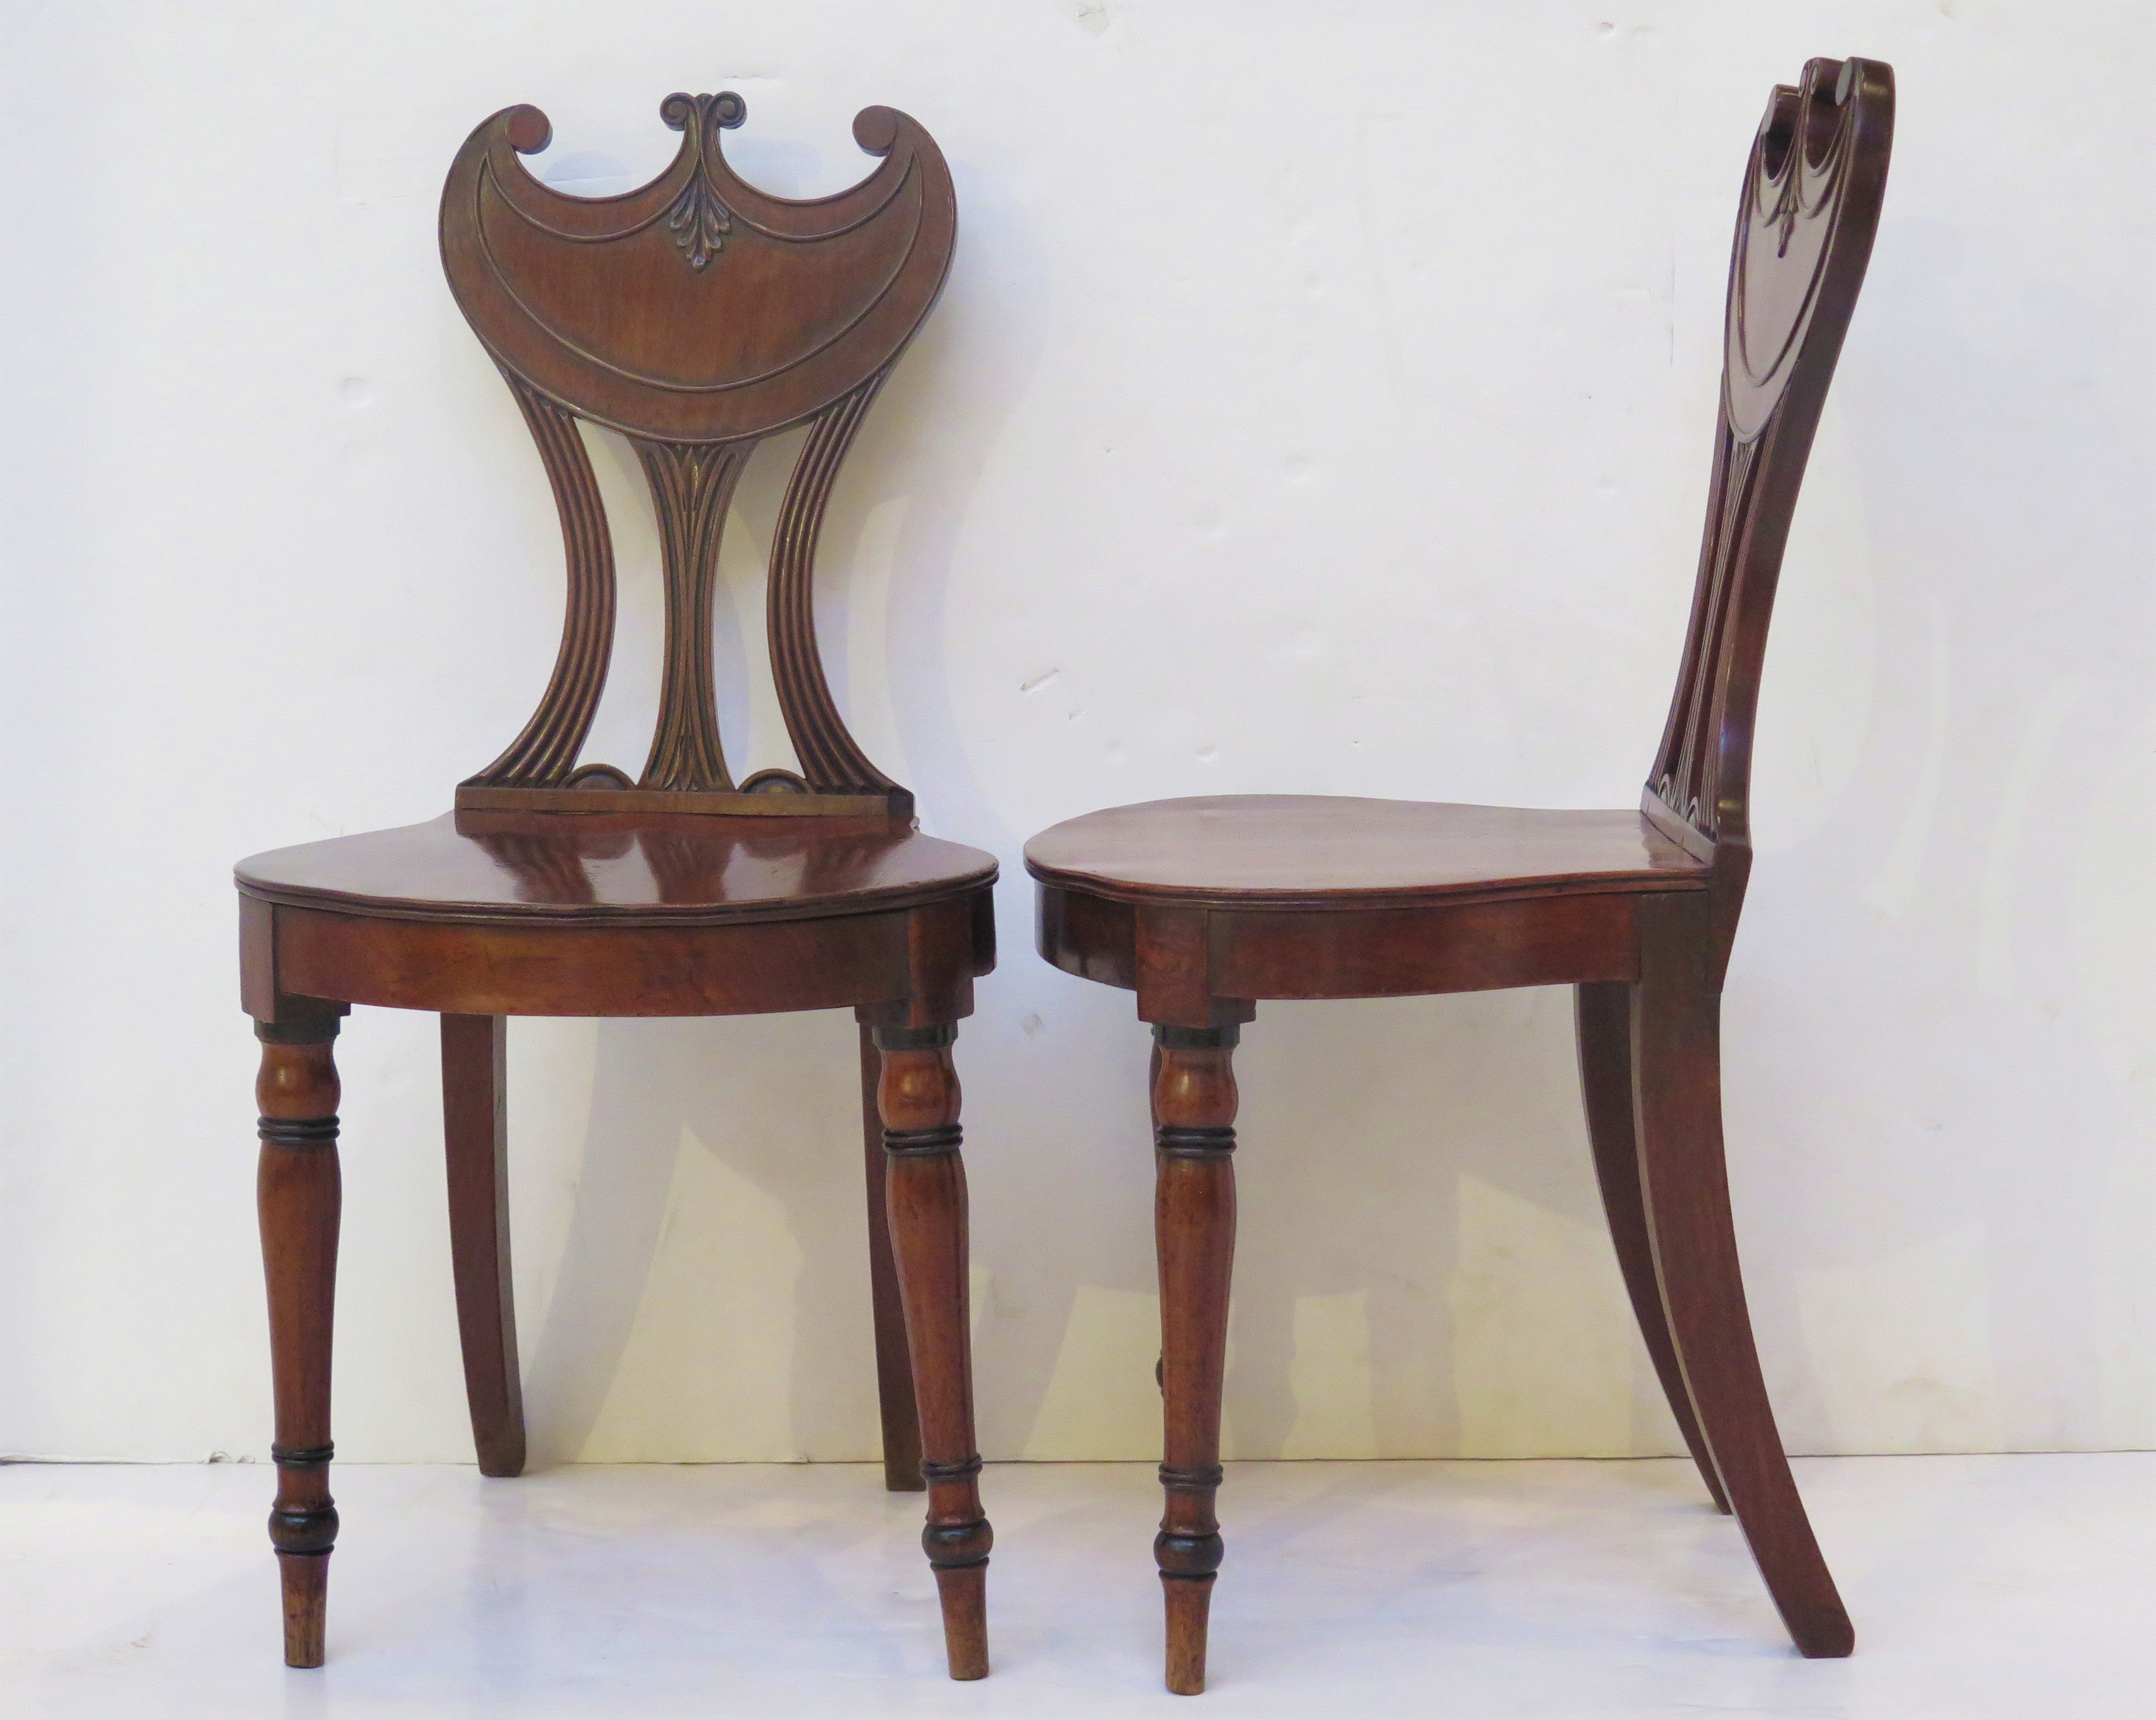 Pair of Regency Hall Chairs